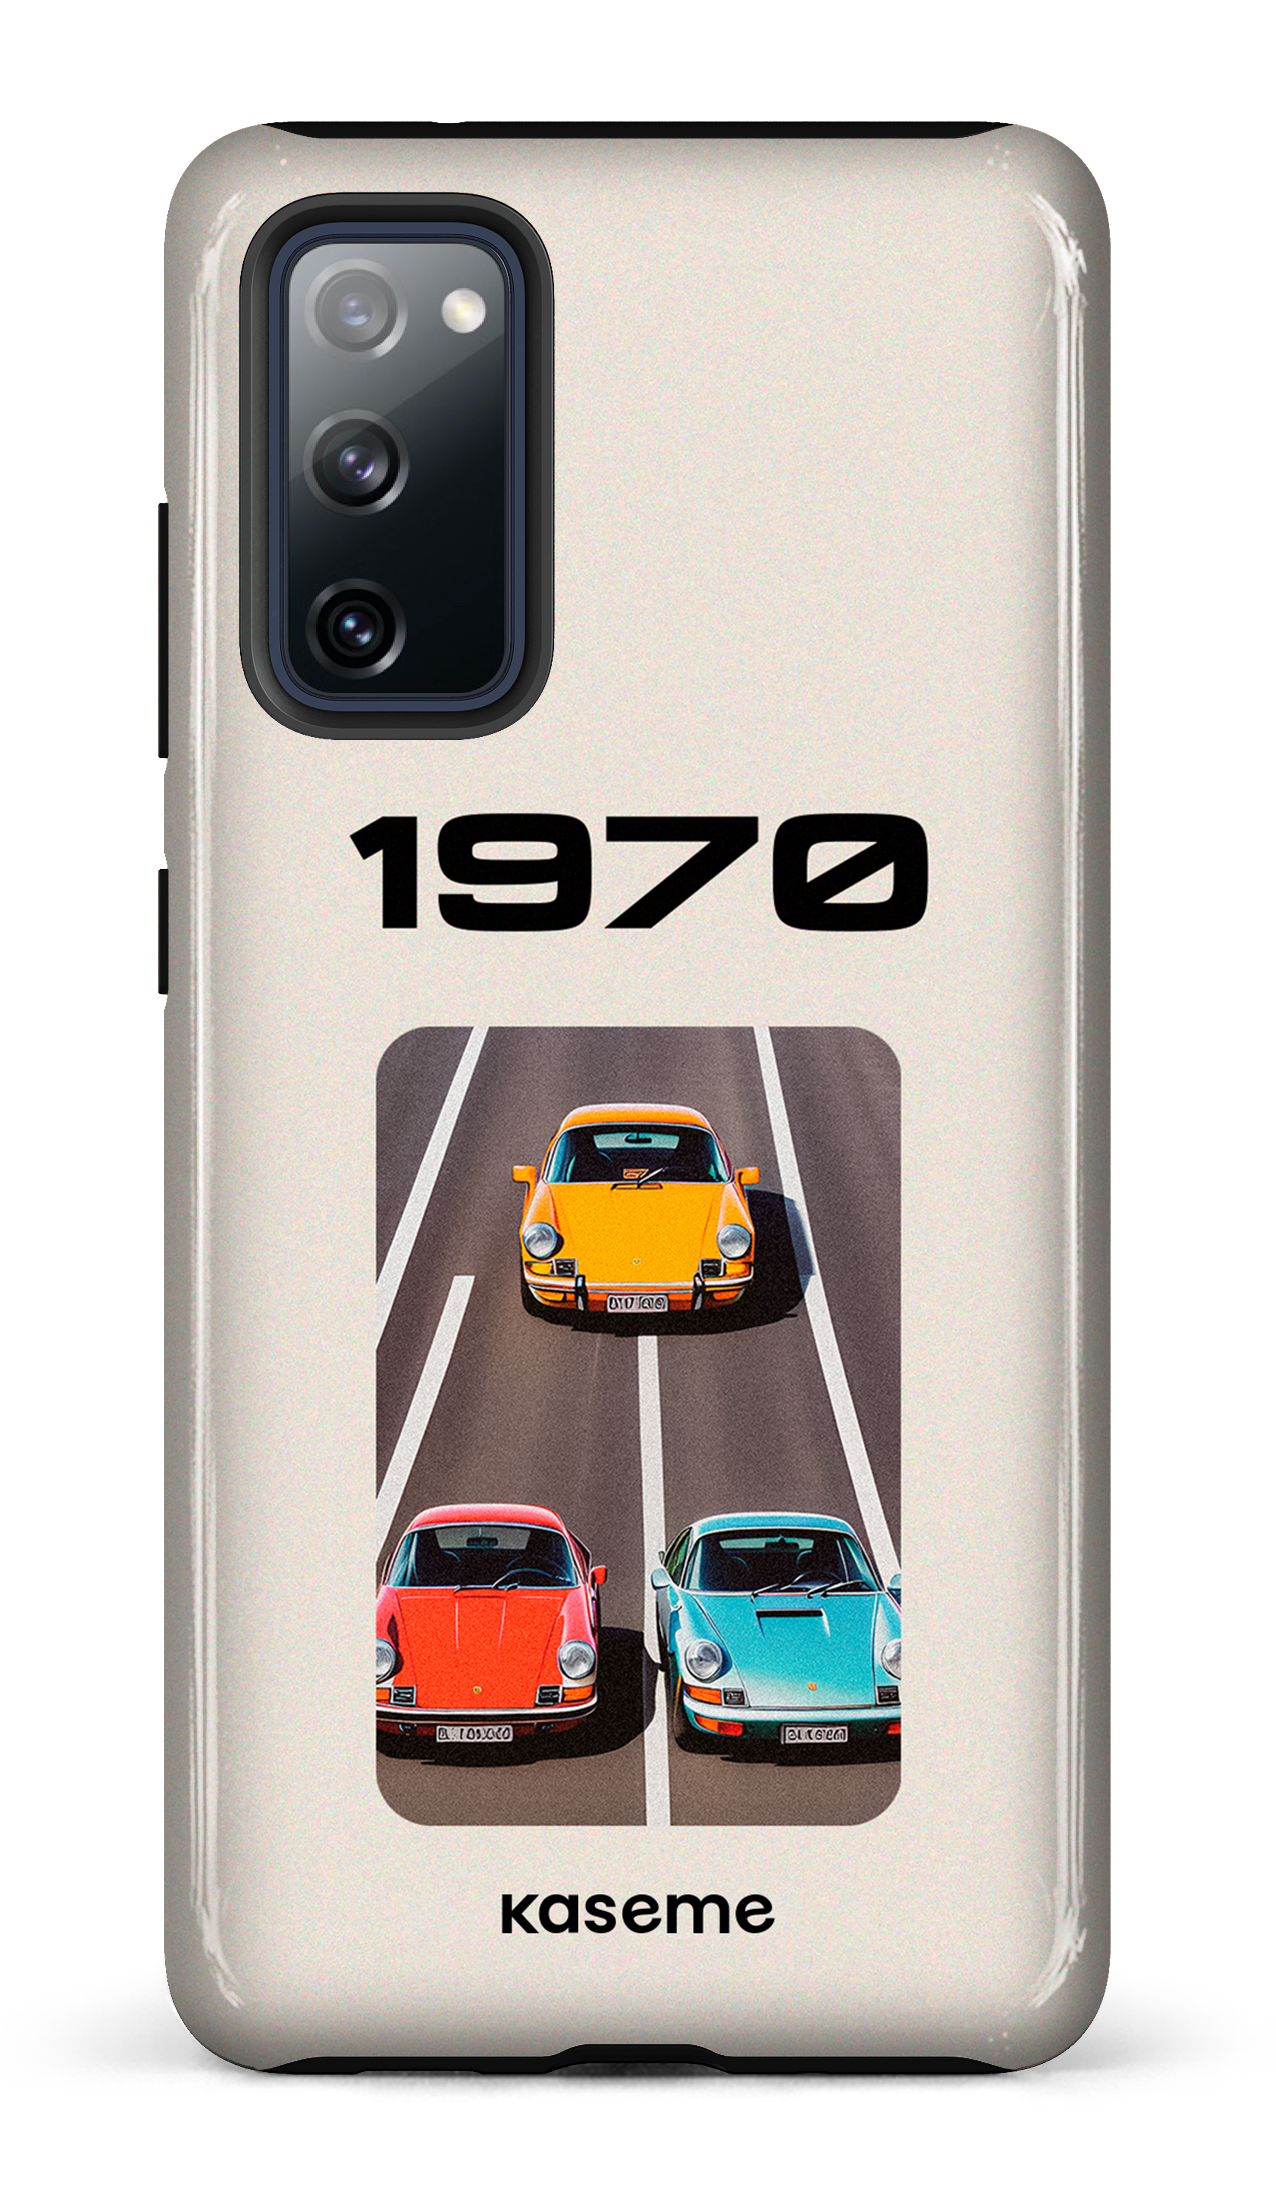 The 1970 - Galaxy S20 FE